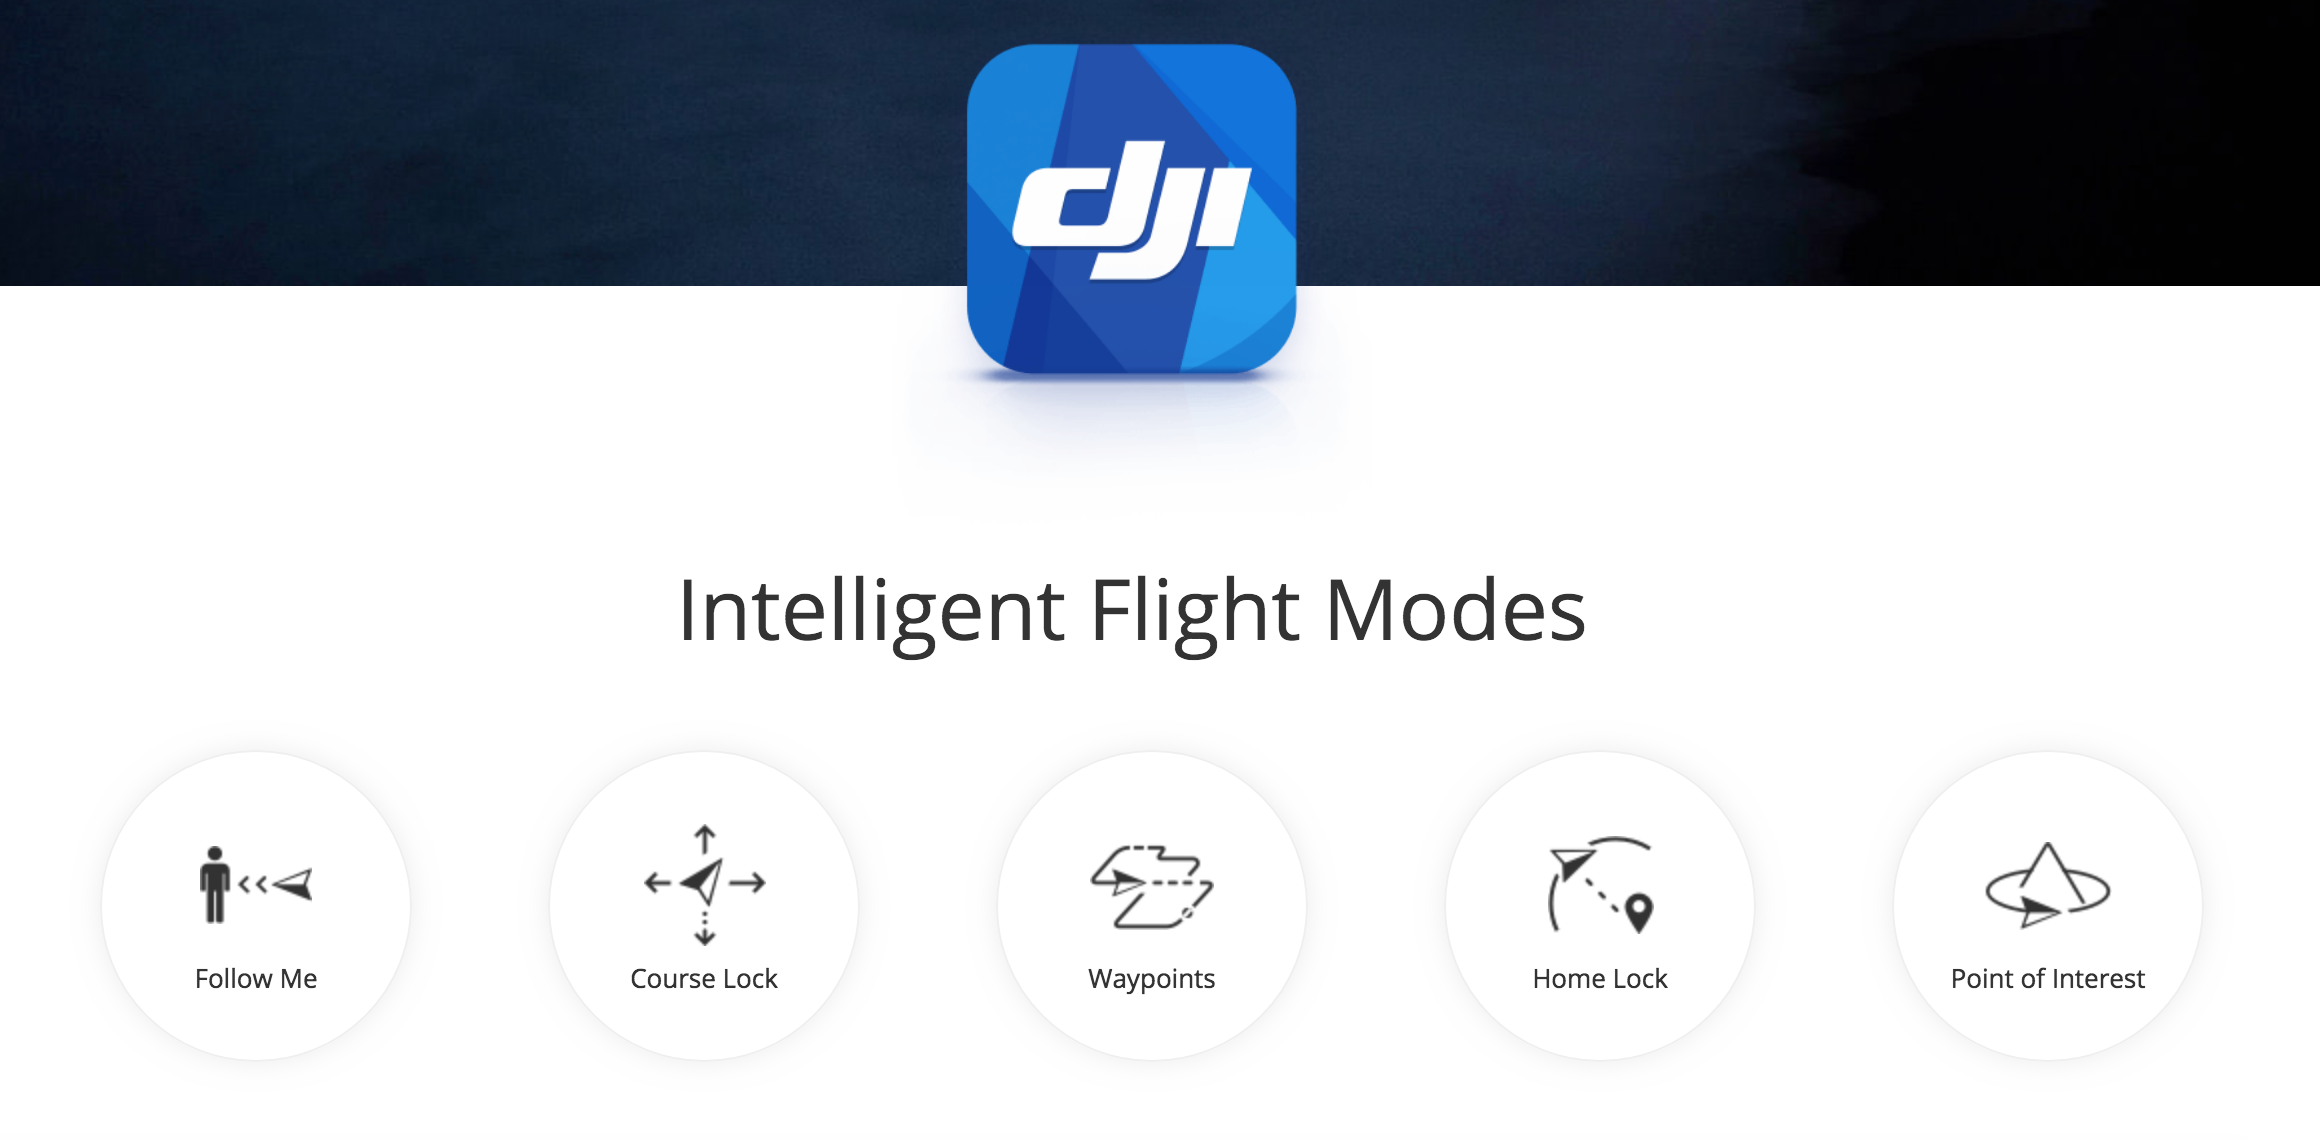 Picture of DJI's Intelligent Flight Mode